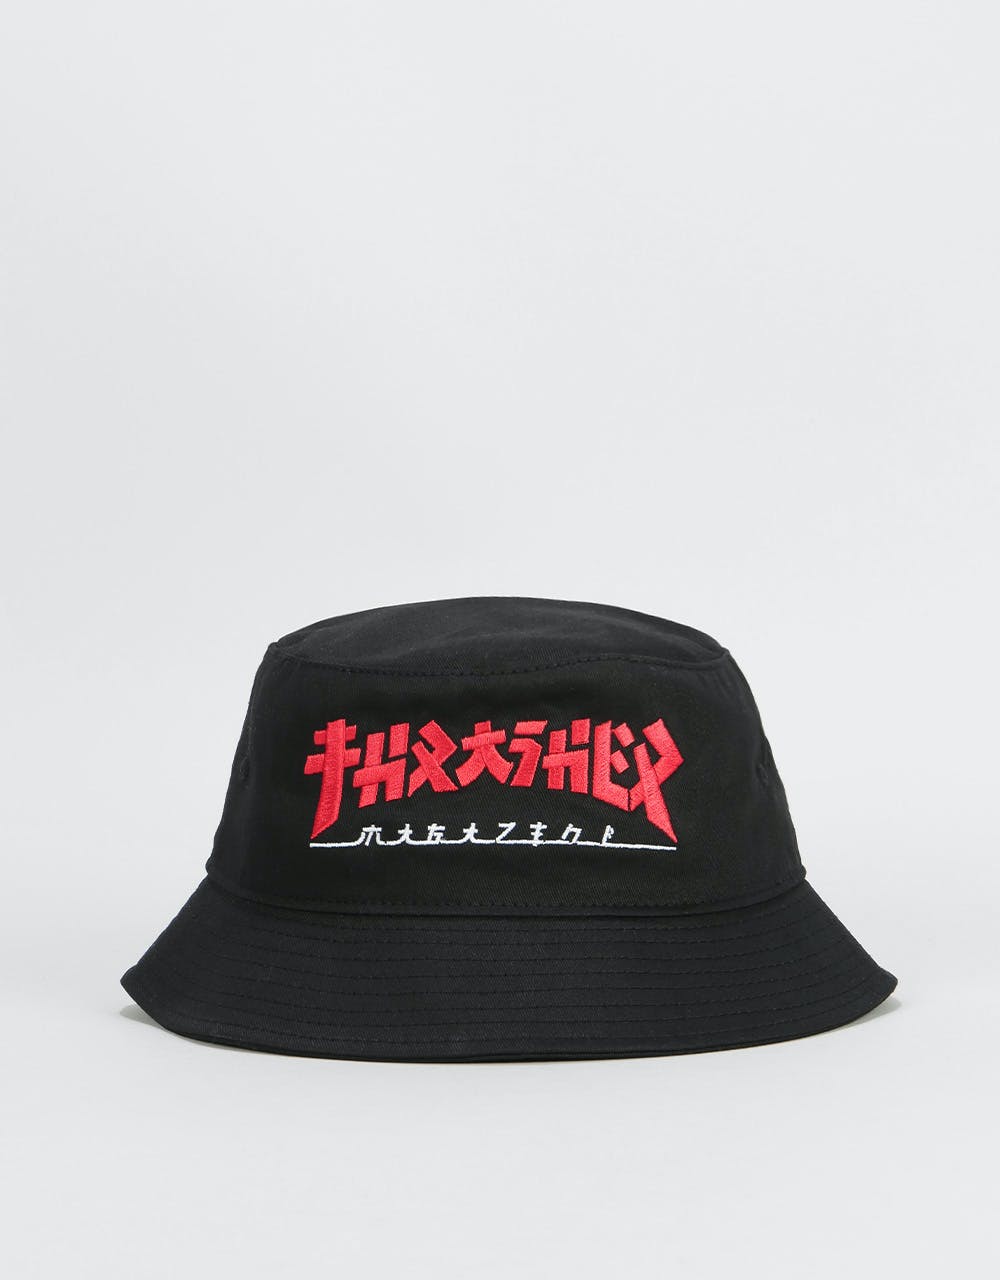 Thrasher Godzilla Bucket Hat - Black